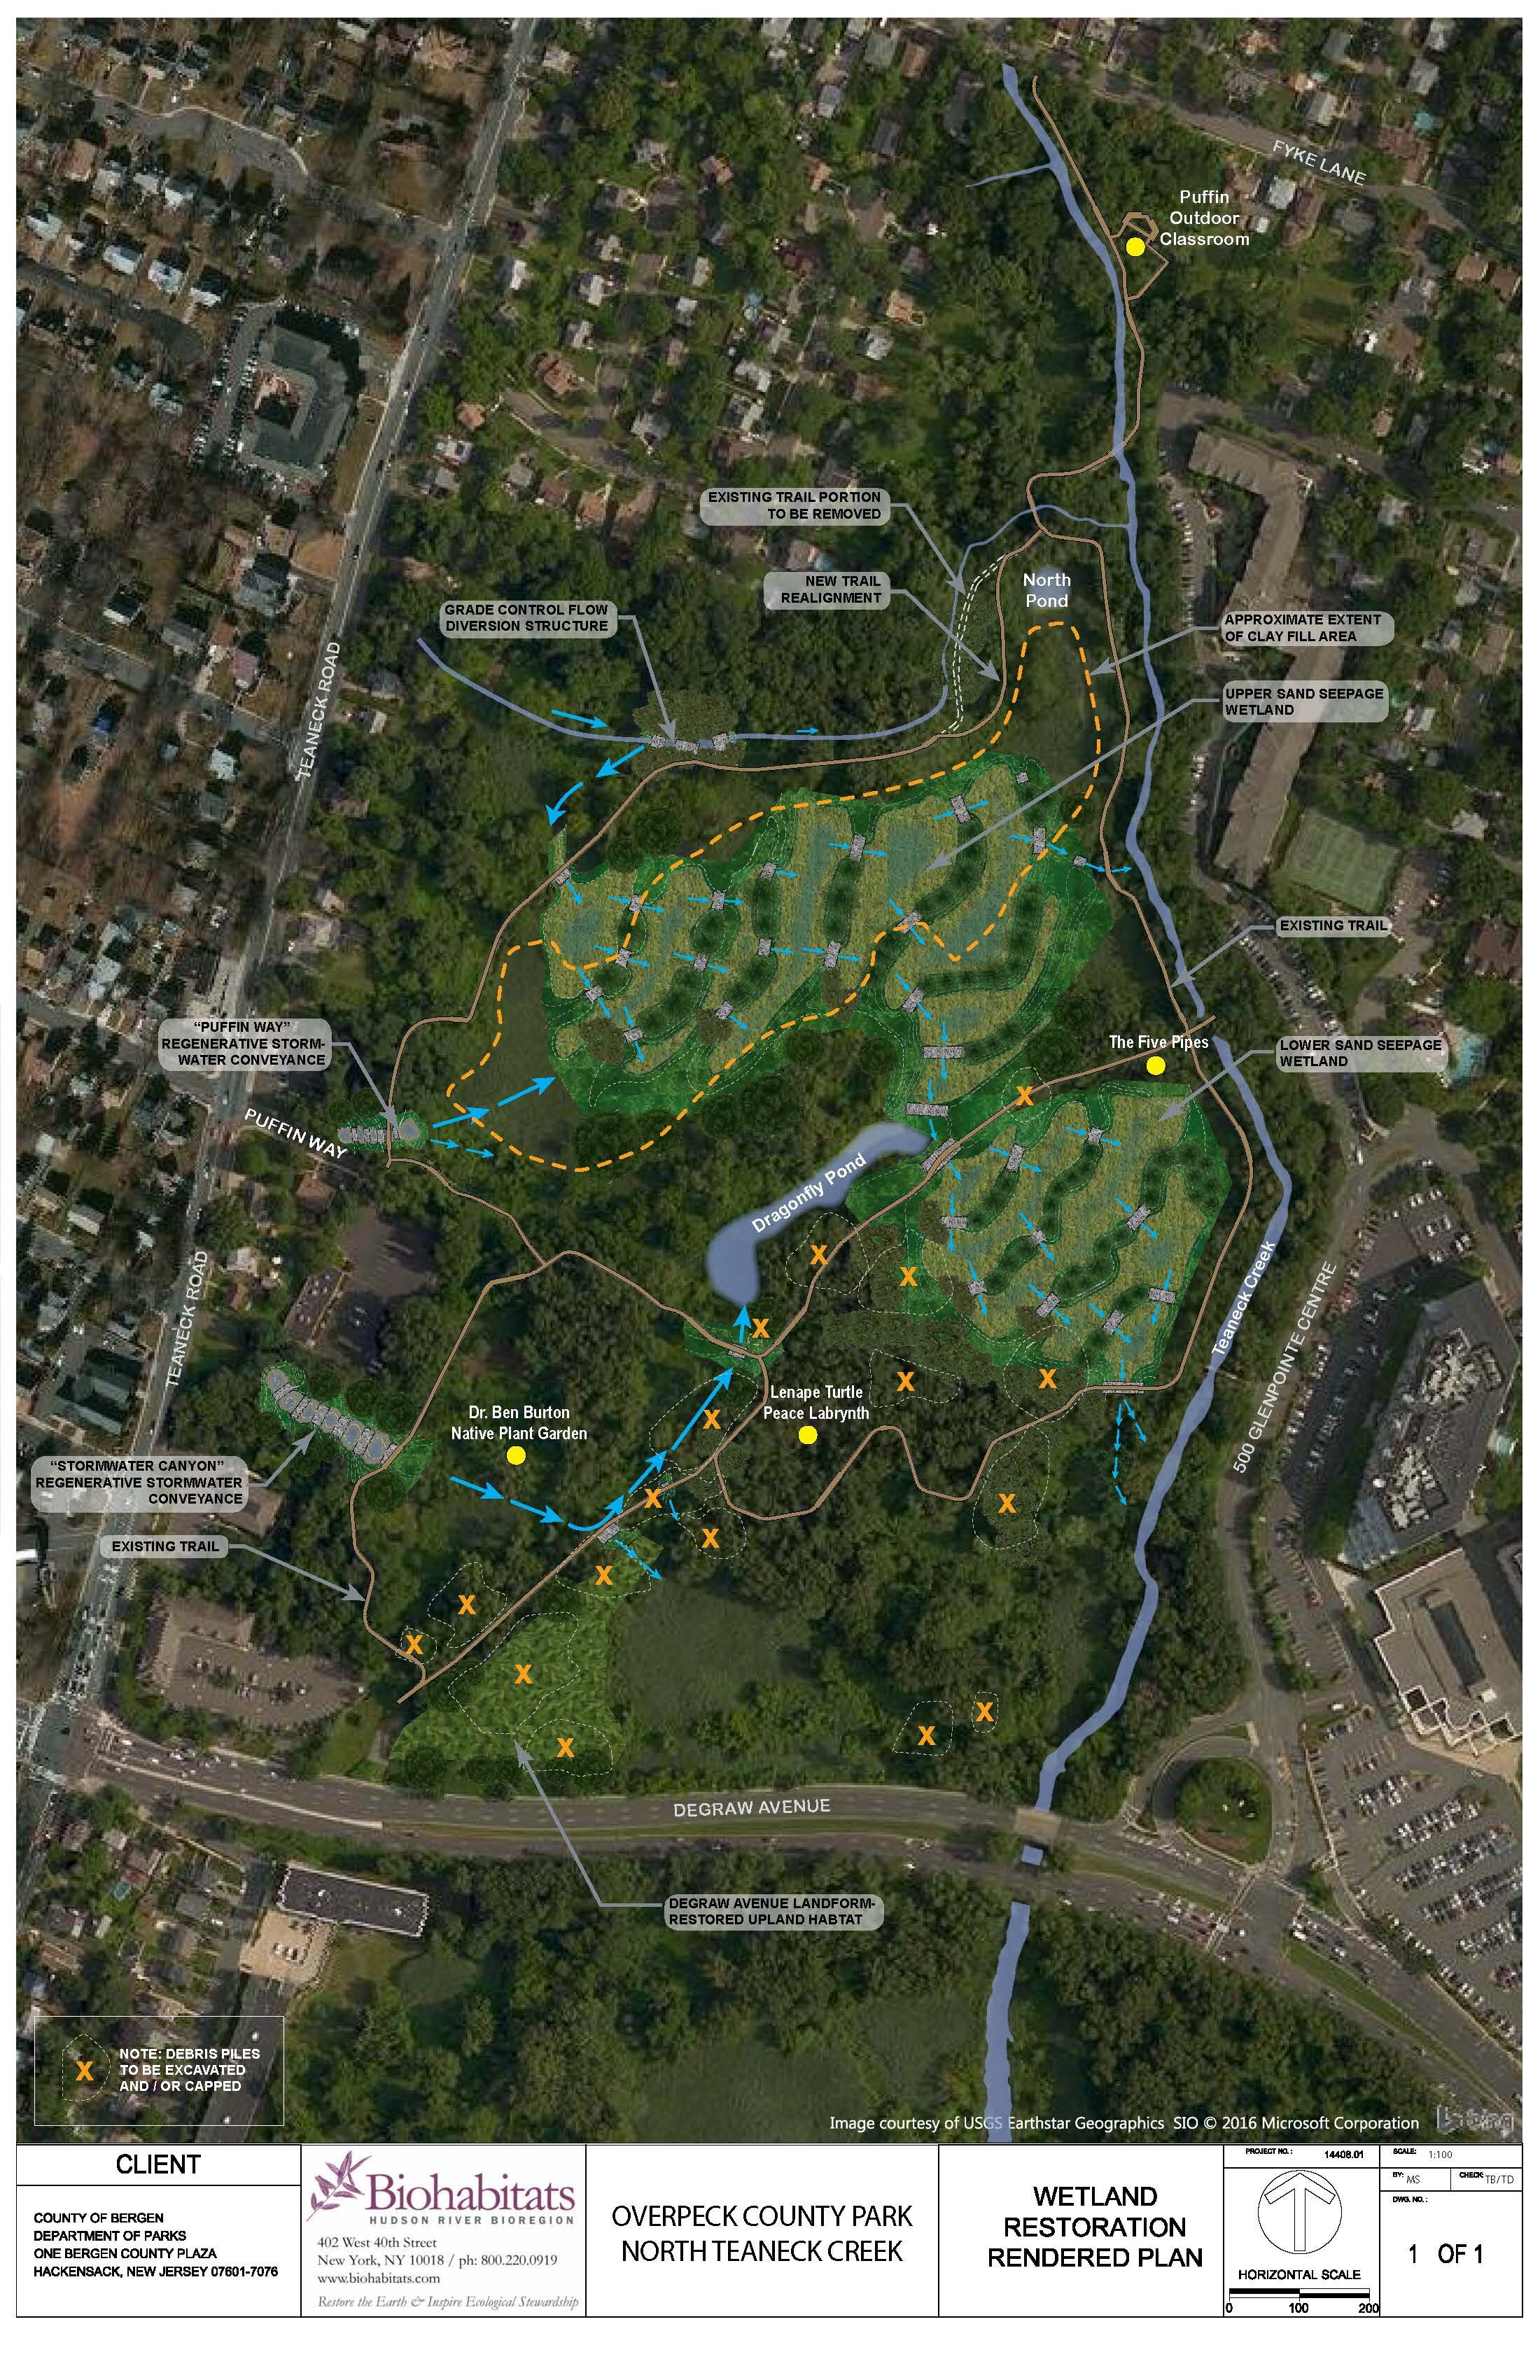 Teaneck_Creek_Park_Restoration_Plan_overall_plan_view_08_26_2020.jpg